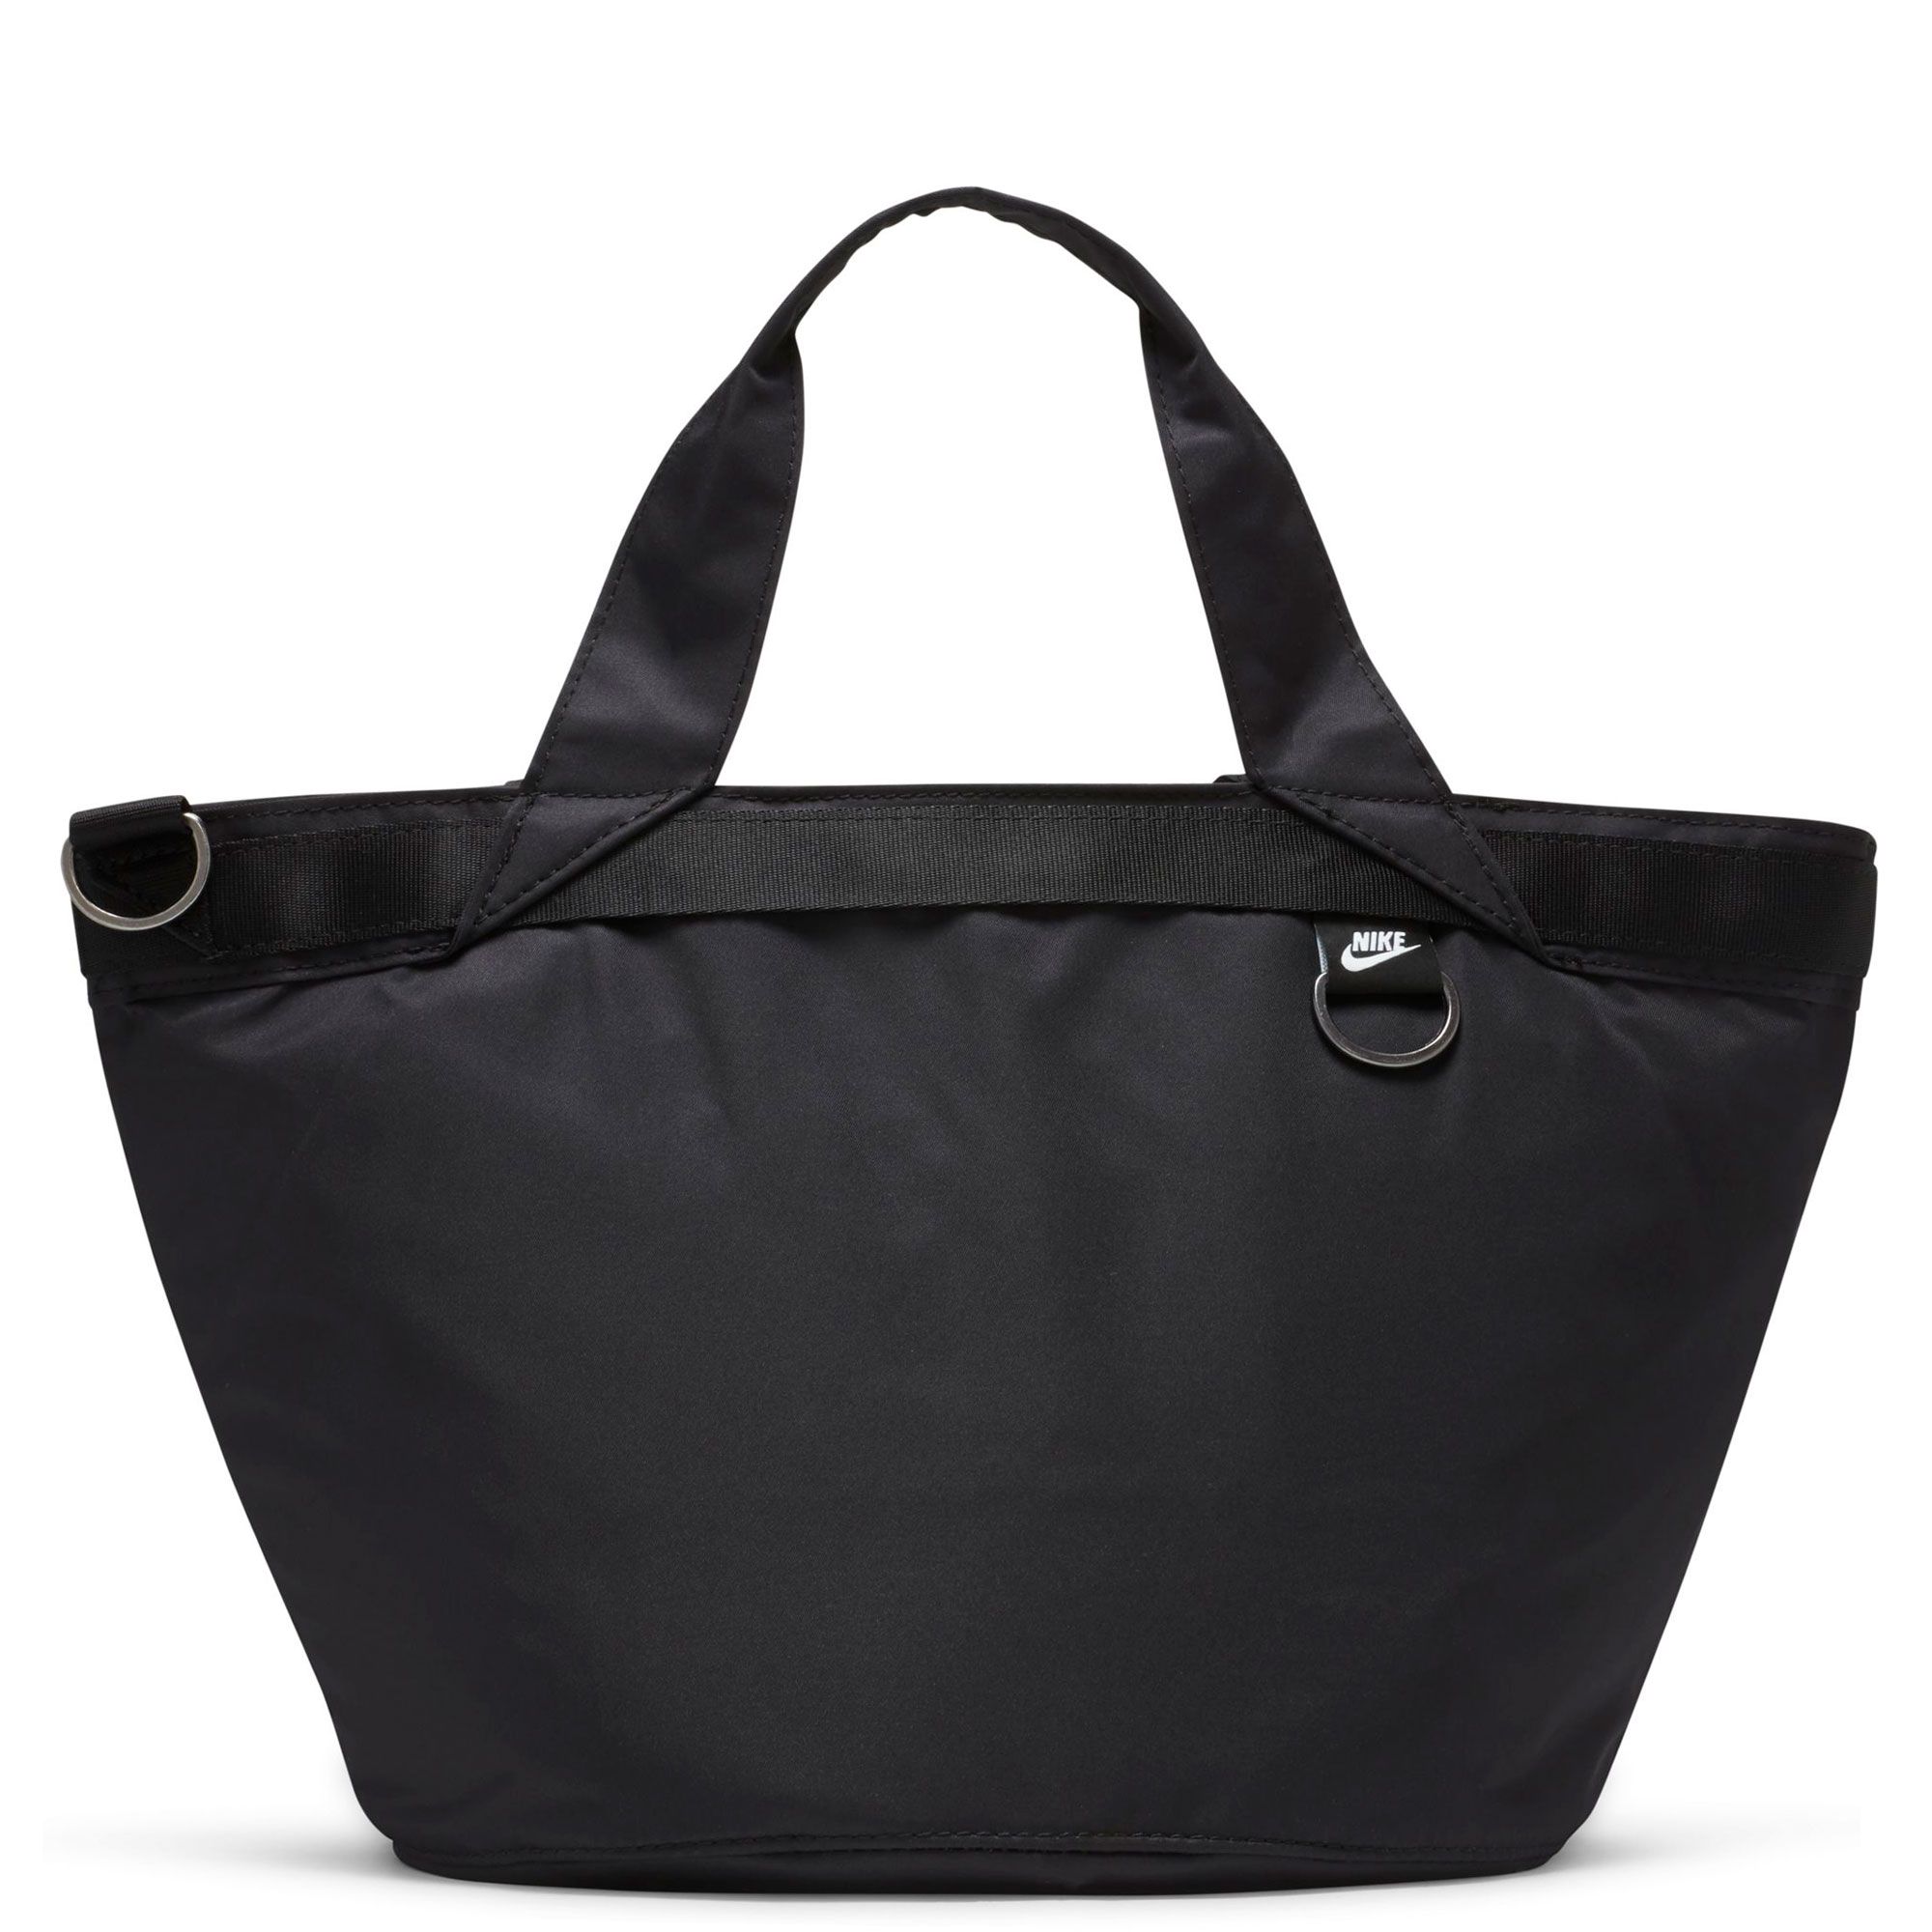 Nike WMNS Futura Luxe Crossbody Bag Black - BLACK/BLACK/WHITE